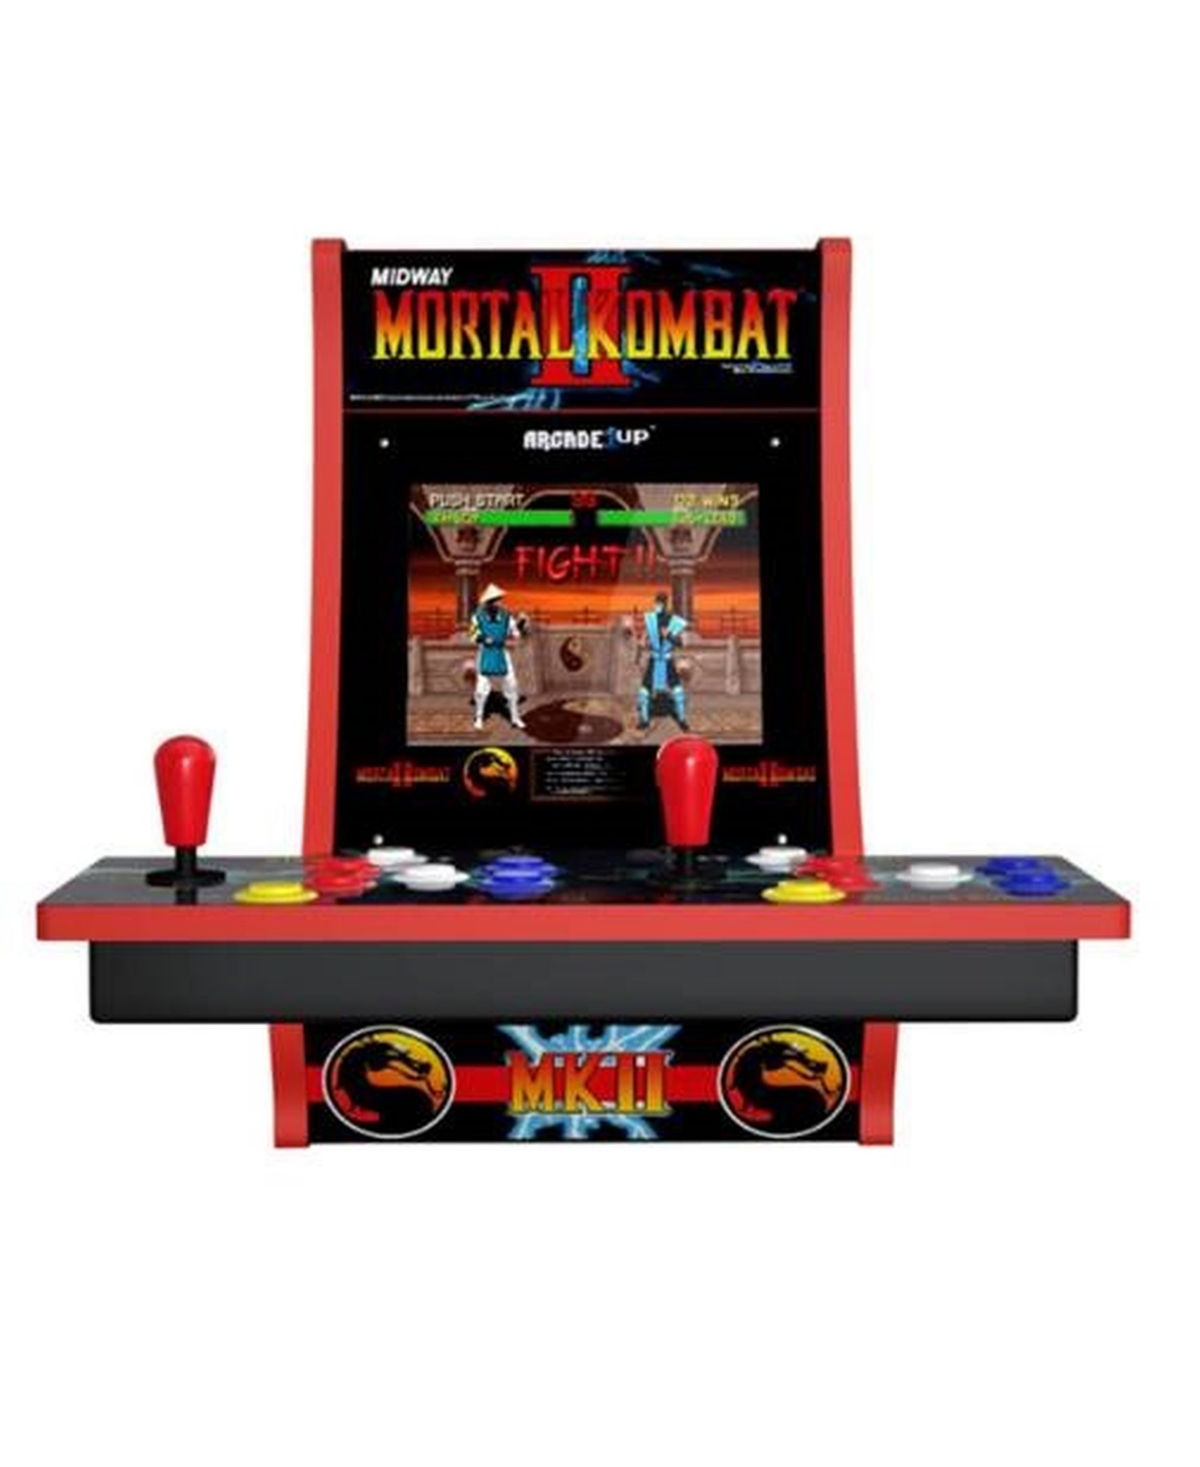 12920620 Arcade 1UP Mortal Kombat Ii 2 Player Countercade A sku 12920620